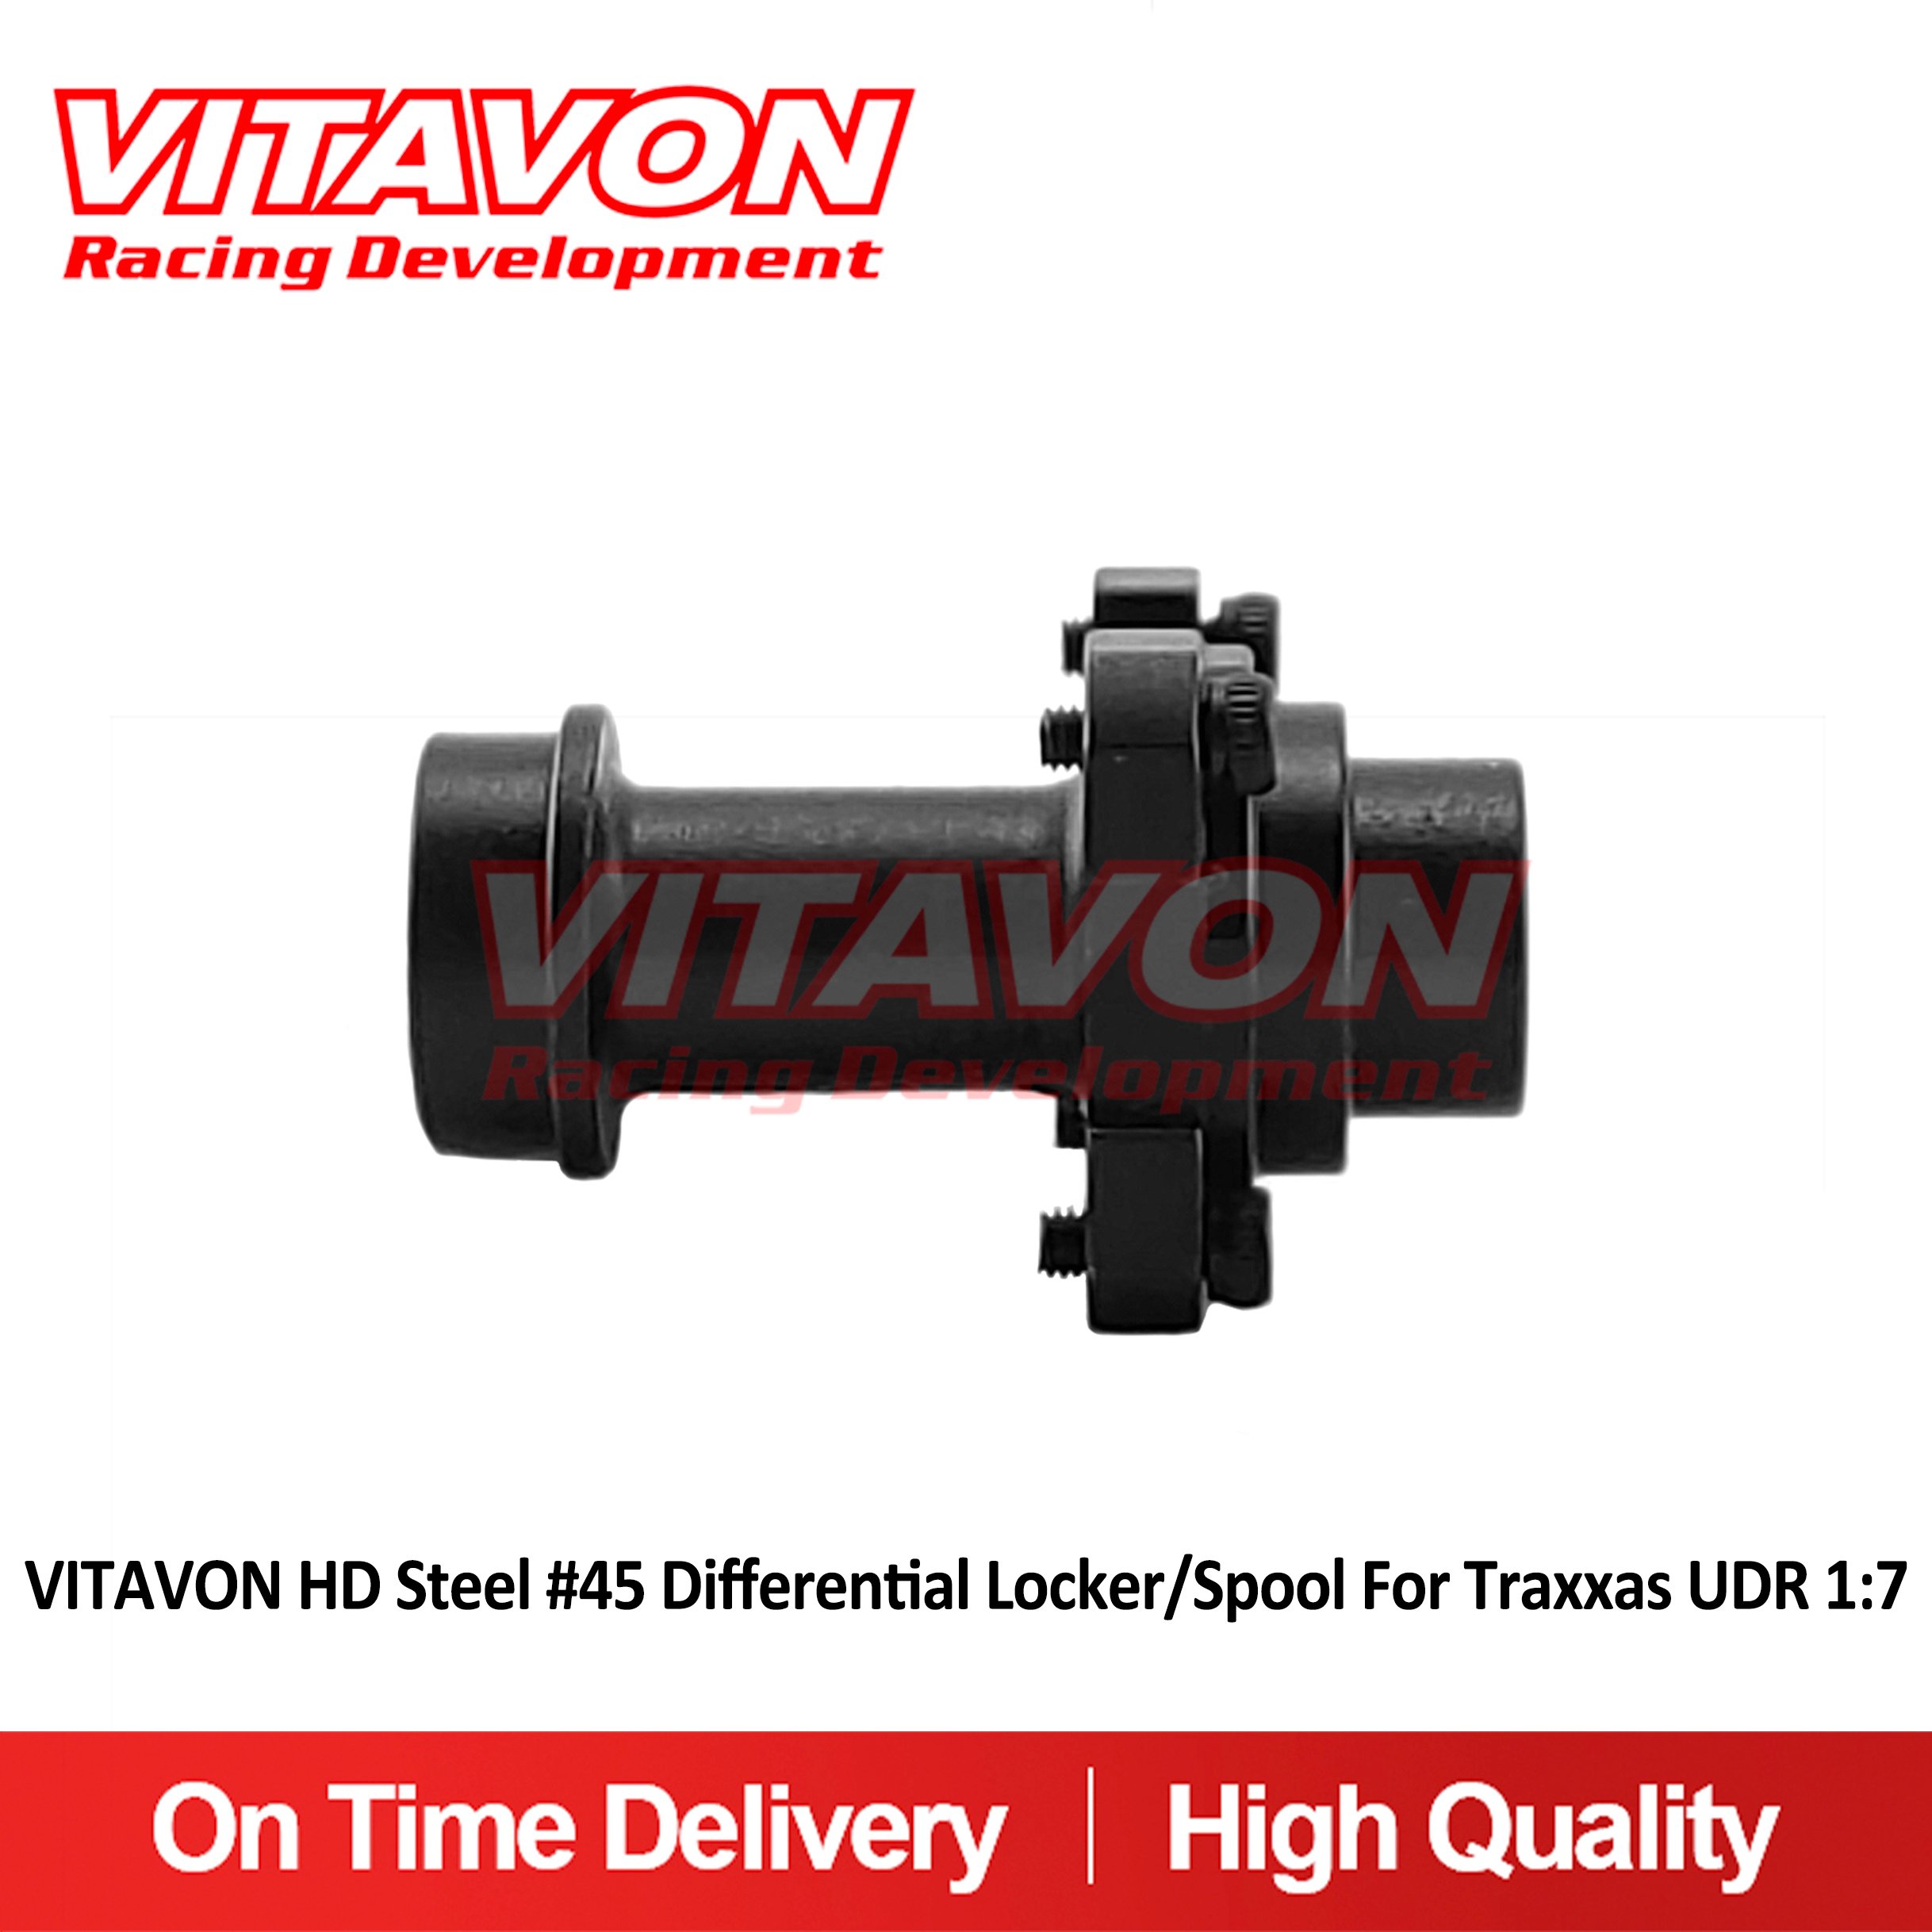 VITAVON HD Steel #45 Differential Locker/Spool For Traxxas UDR 1:7